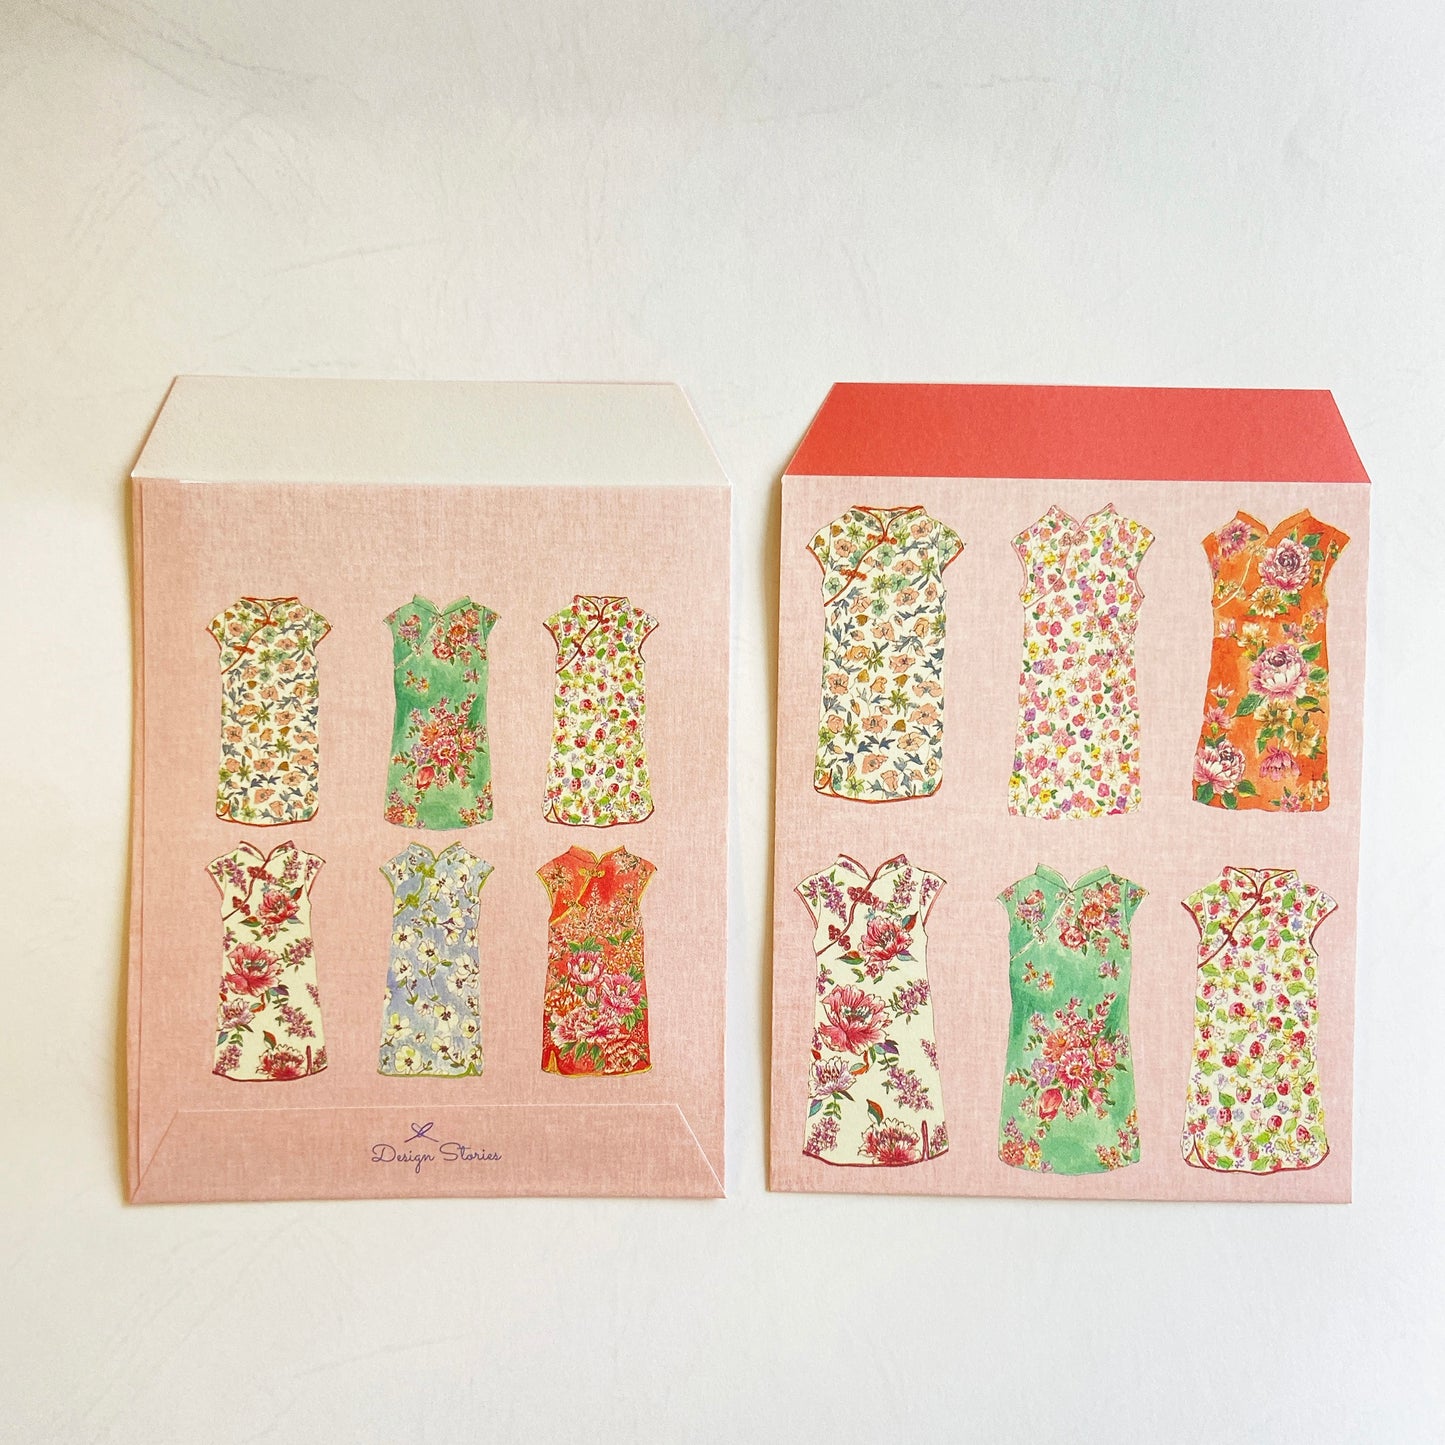 New❗️" Qipao dress" Small envelopes